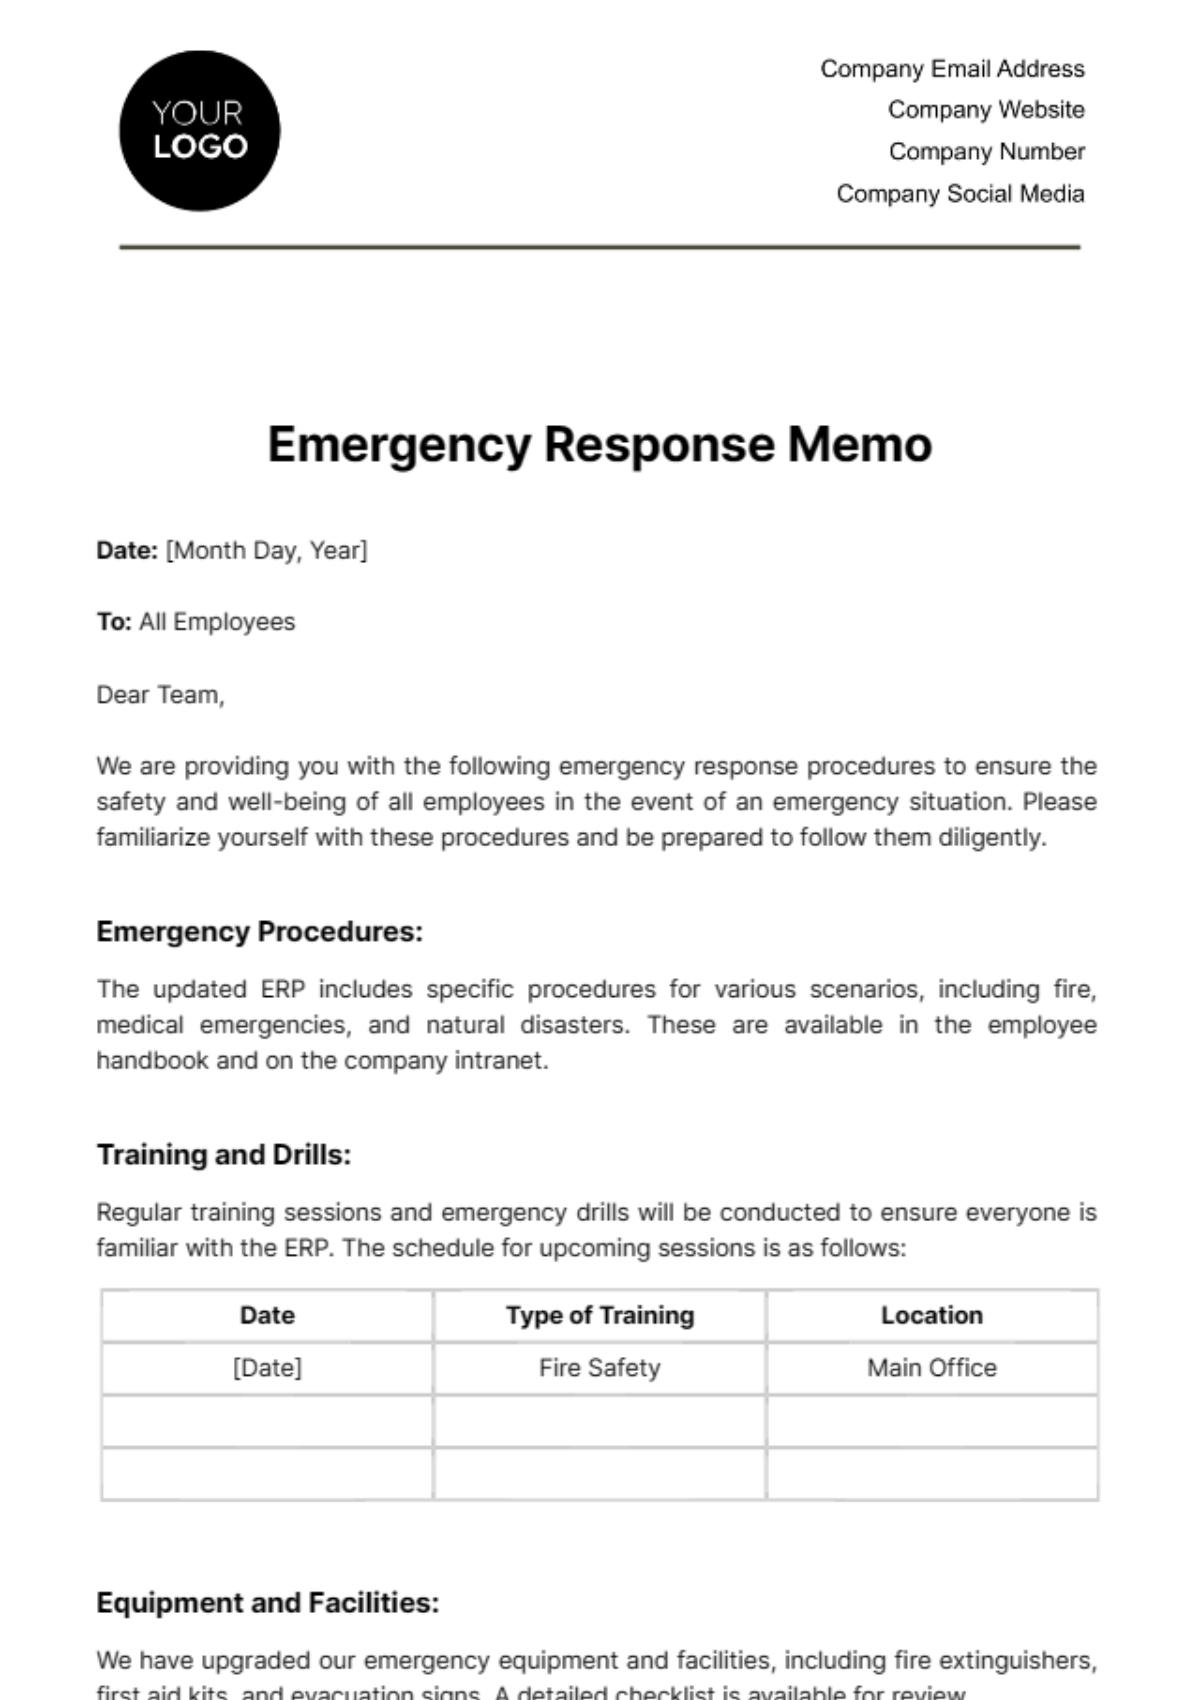 Emergency Response Memo Template